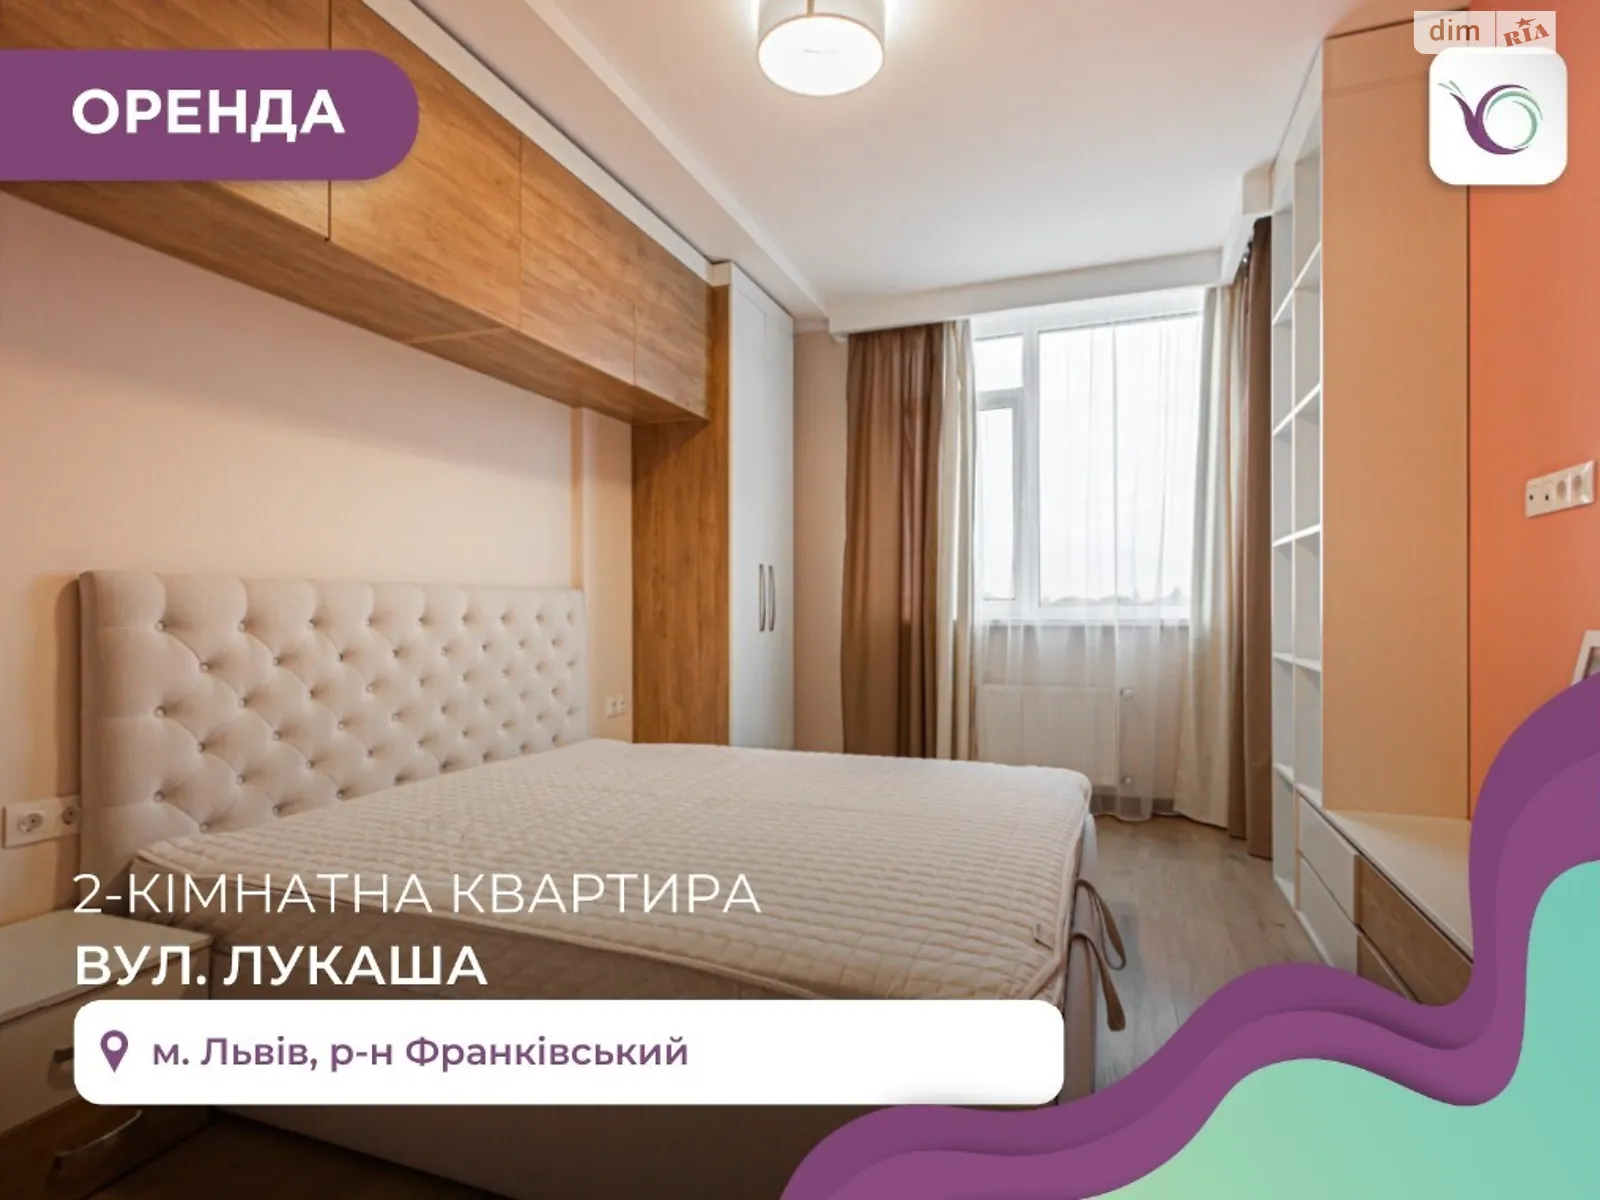 Сдается в аренду 2-комнатная квартира 60 кв. м в Львове, ул. Лукаша - фото 1